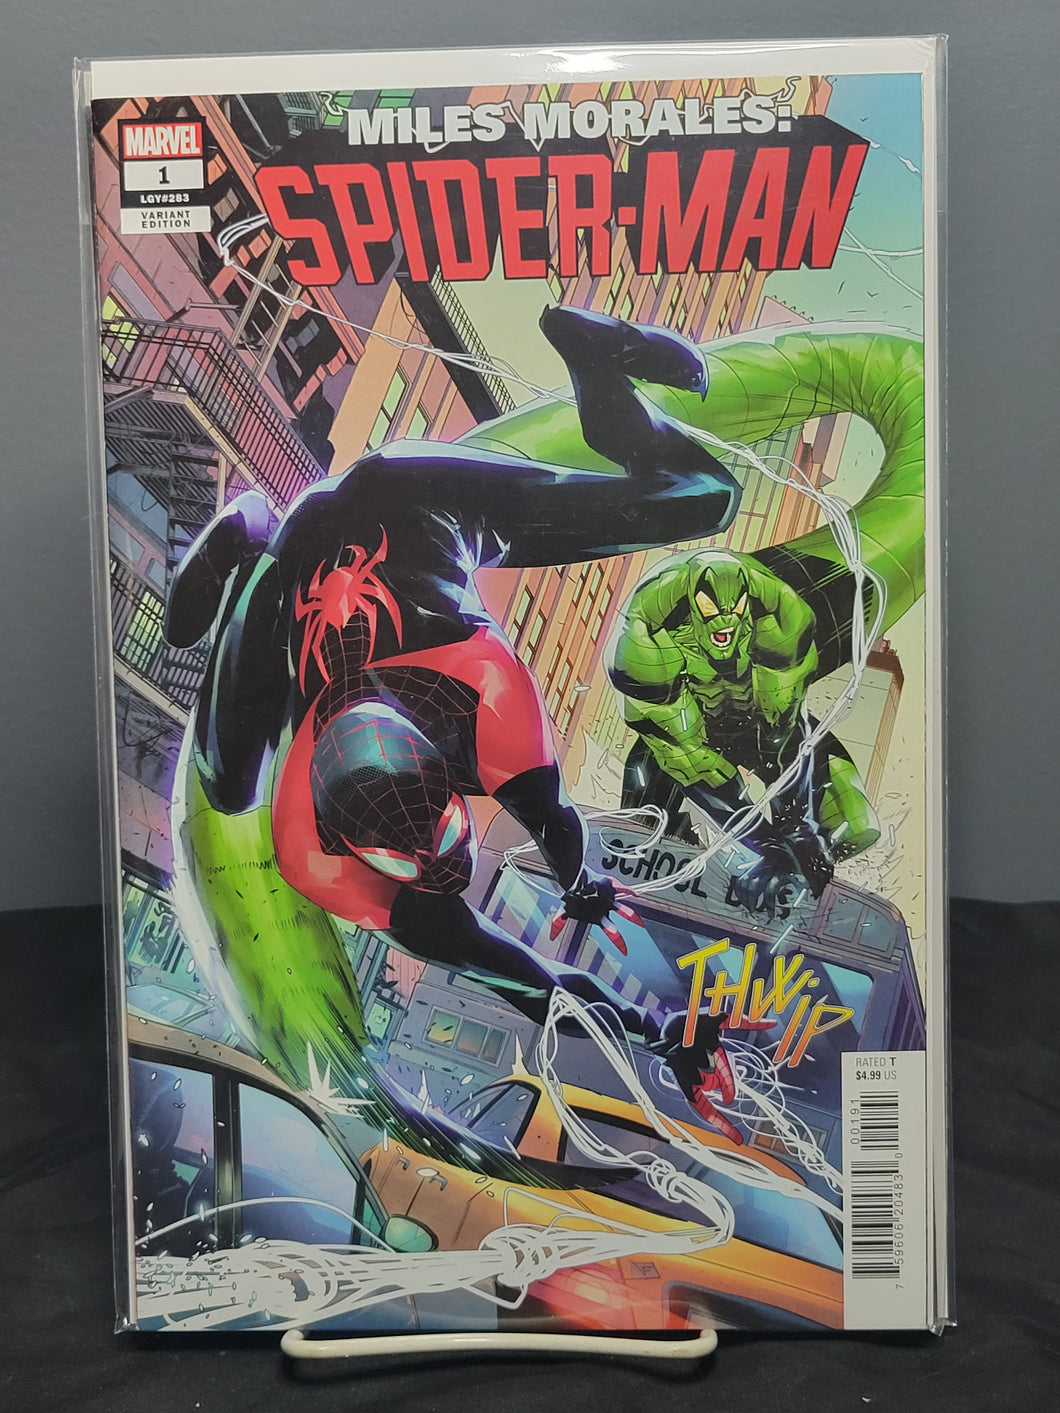 Miles Morales Spider-Man #1 1:25 Variant